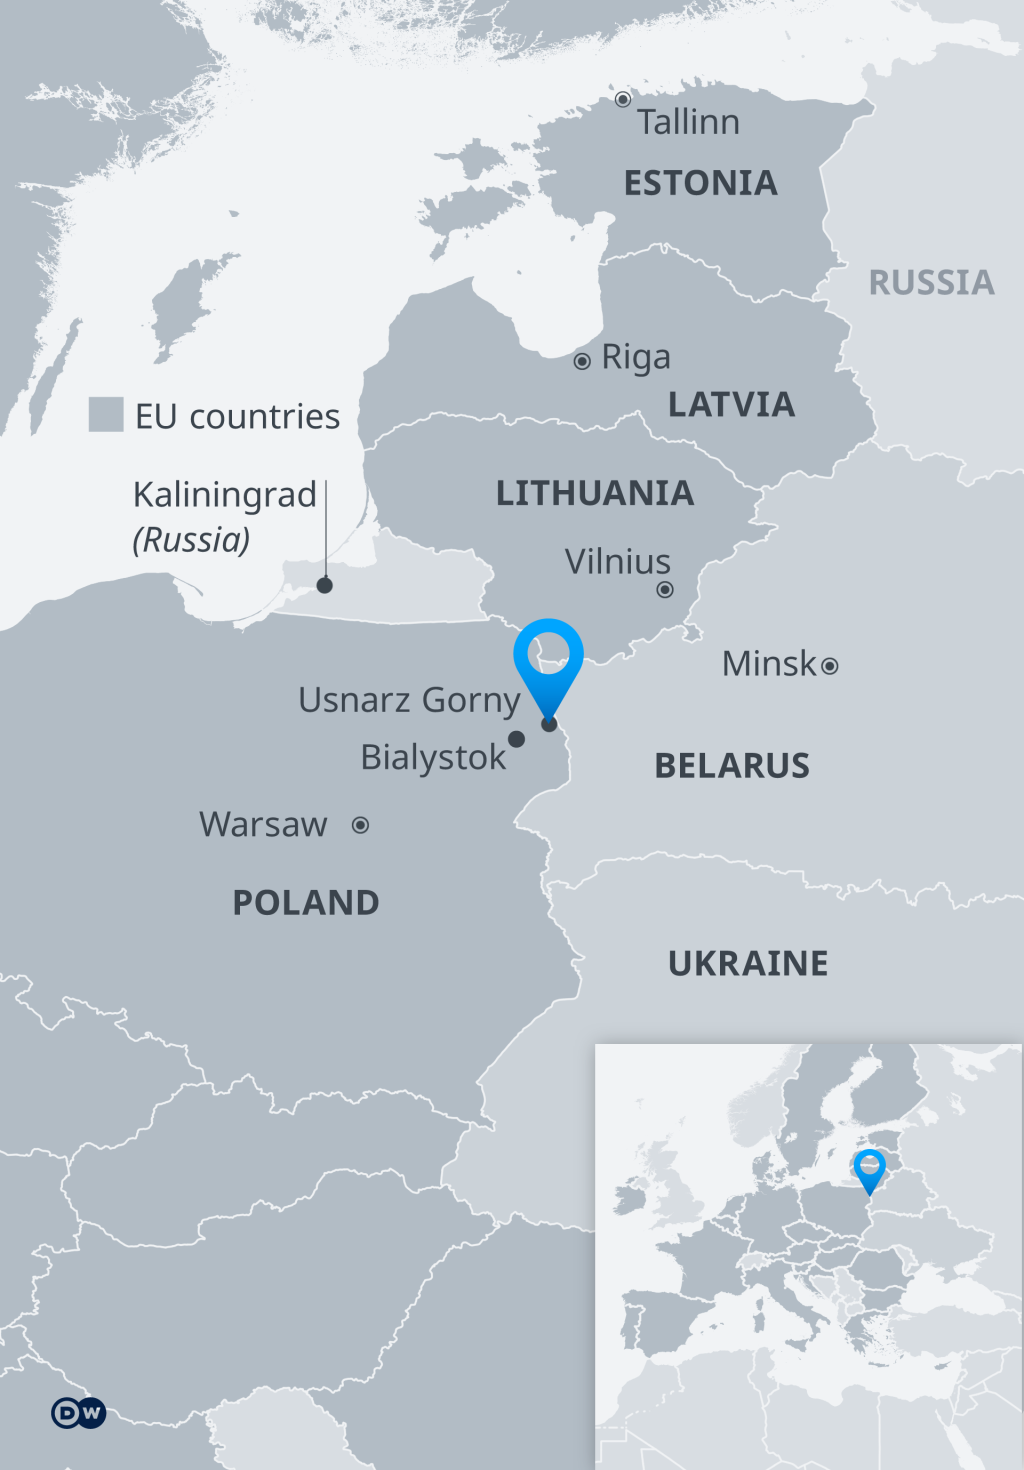 Belarus shares a border with EU countries Poland, Lithuania and Latvia | Source: DW